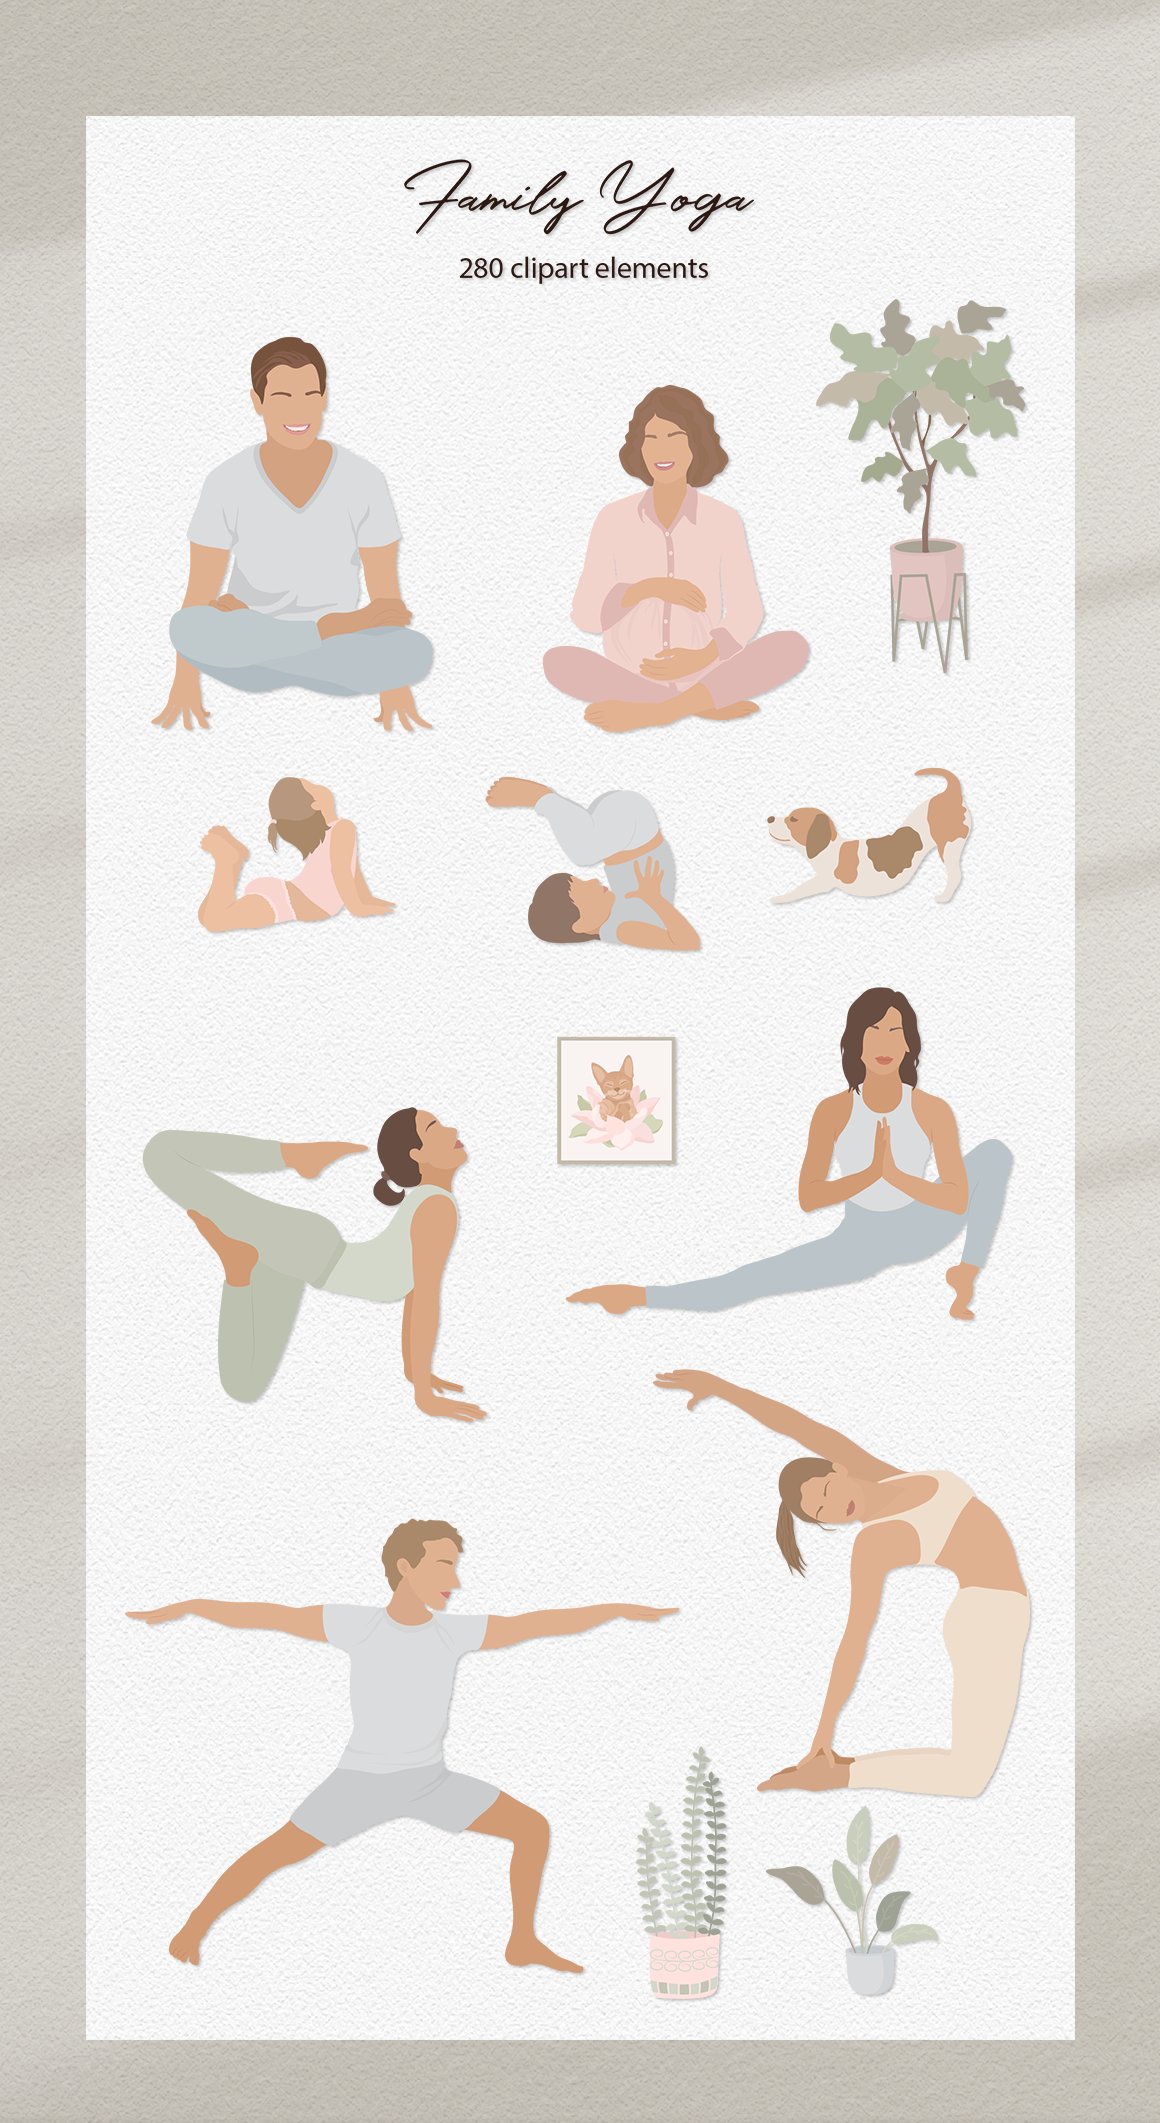 family yoga illustration set 281329 31